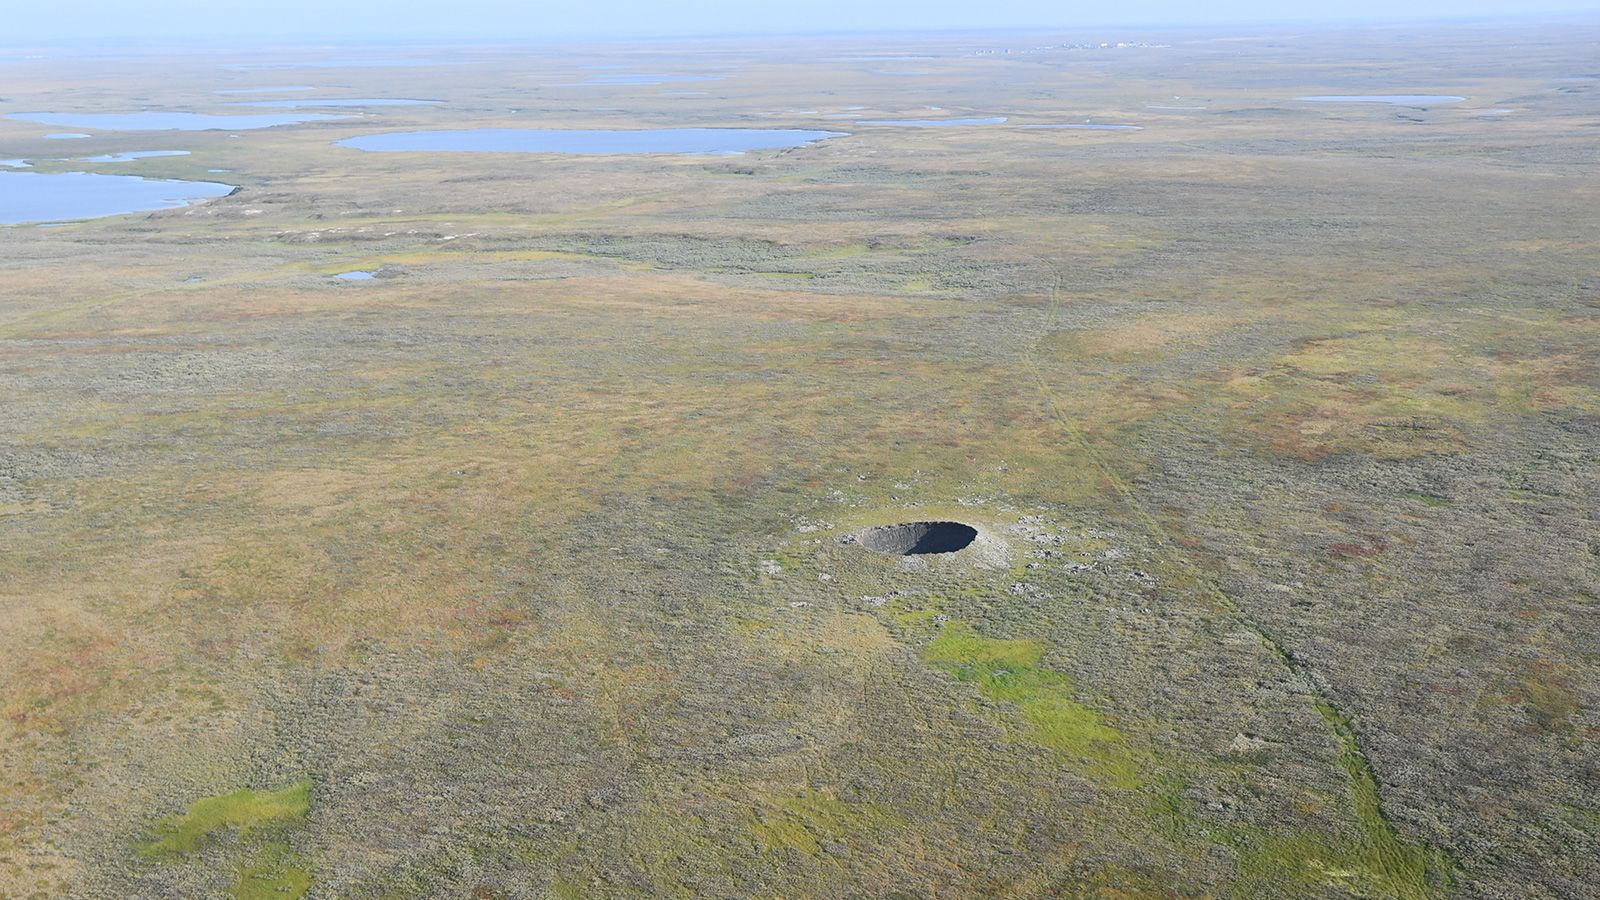 https://media.cnn.com/api/v1/images/stellar/prod/221110112304-permafrost-climate-change-siberian-crater-card.jpg?c=original